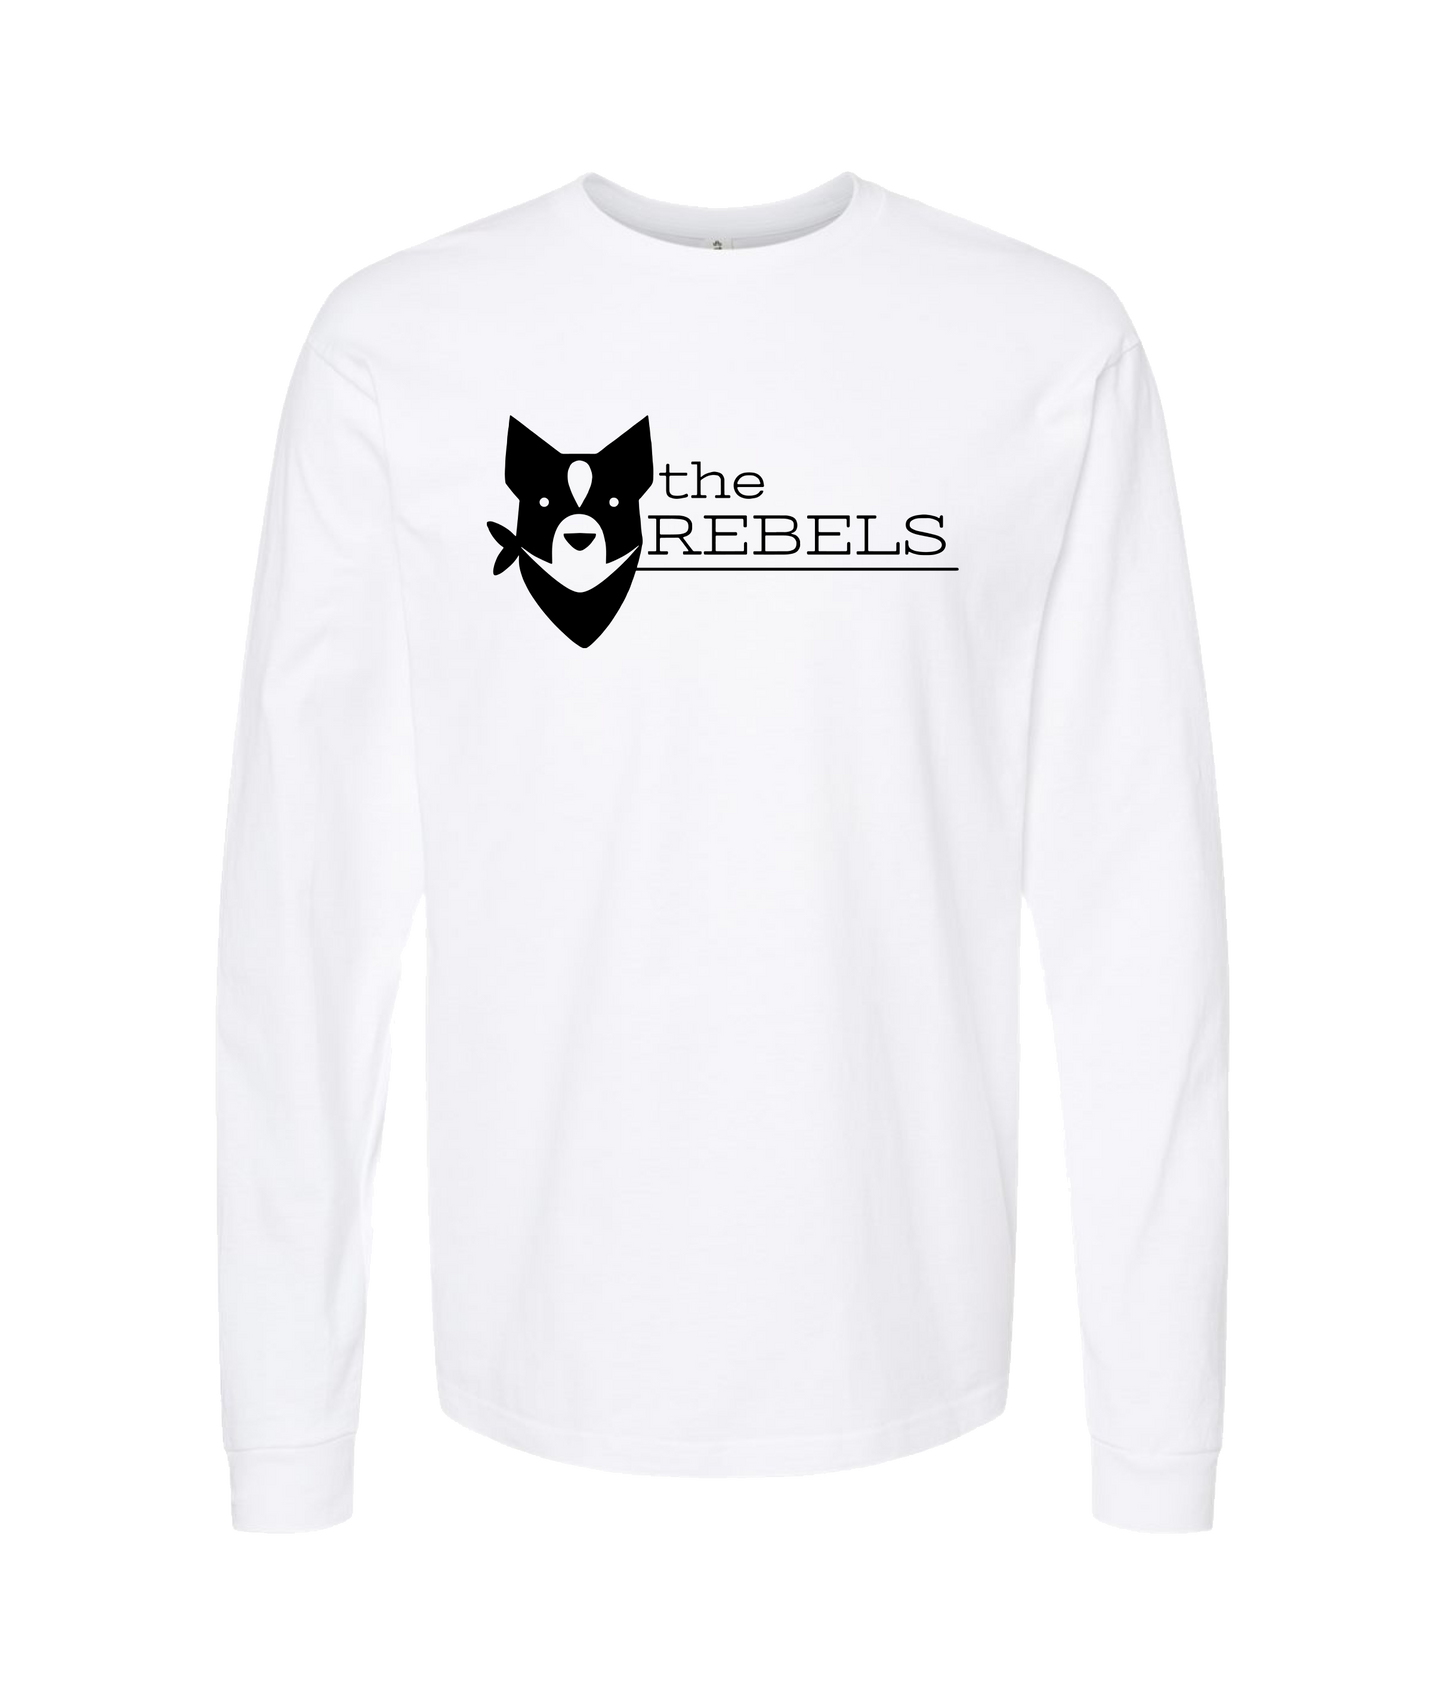 Zeus Rebel Waters - the REBELS logo - White Long Sleeve T